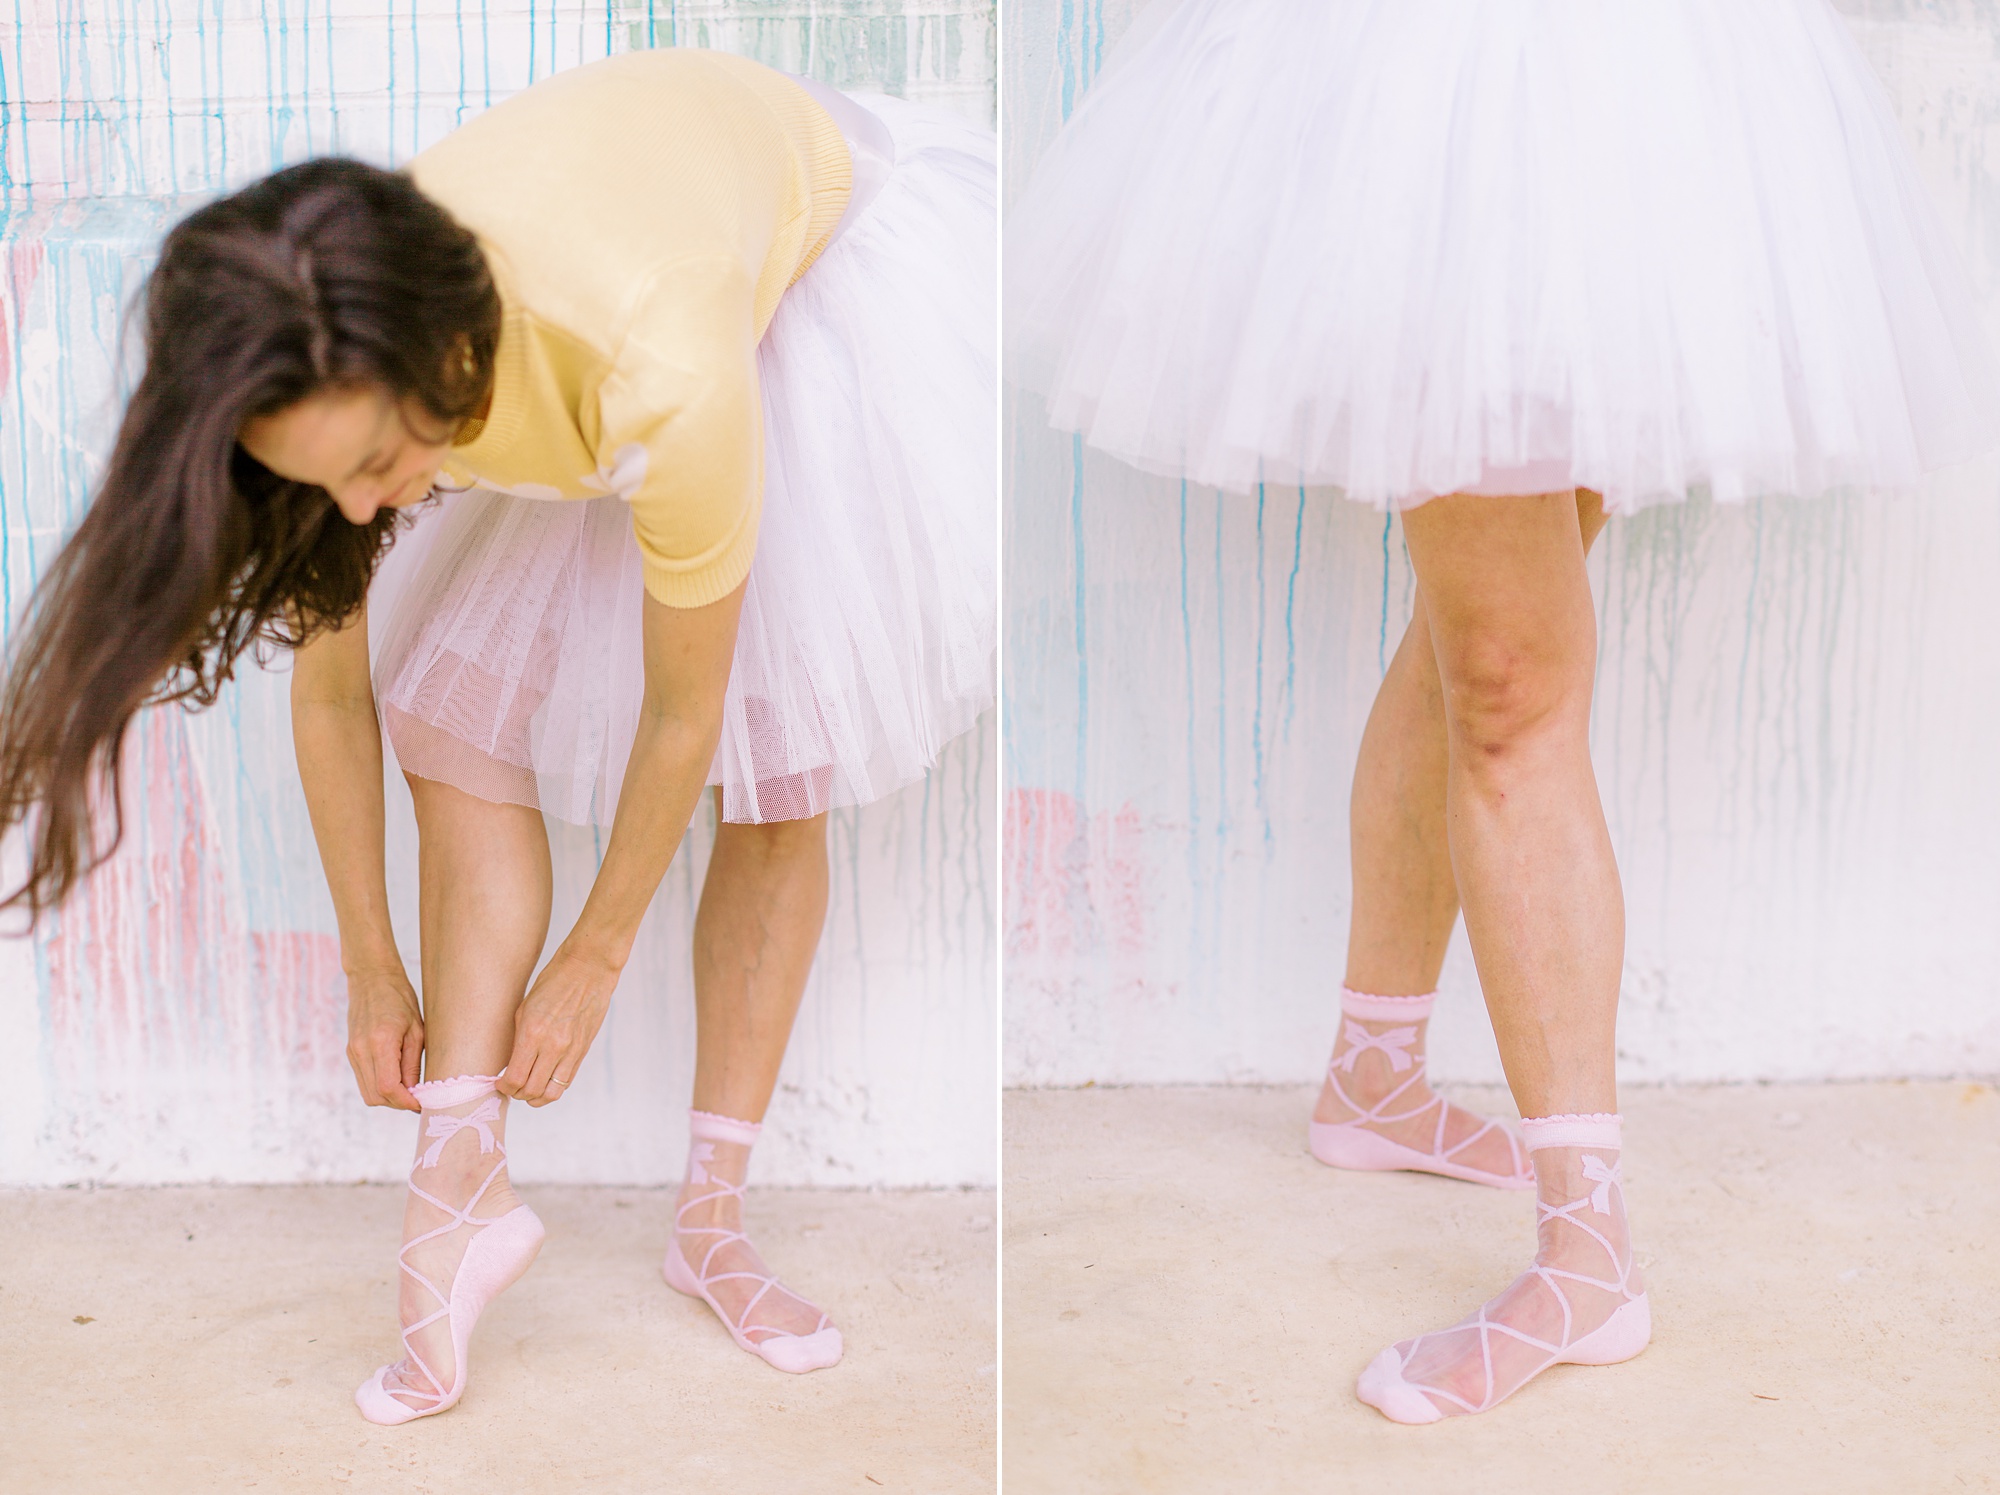 teacher adjusts ballet shoe socks